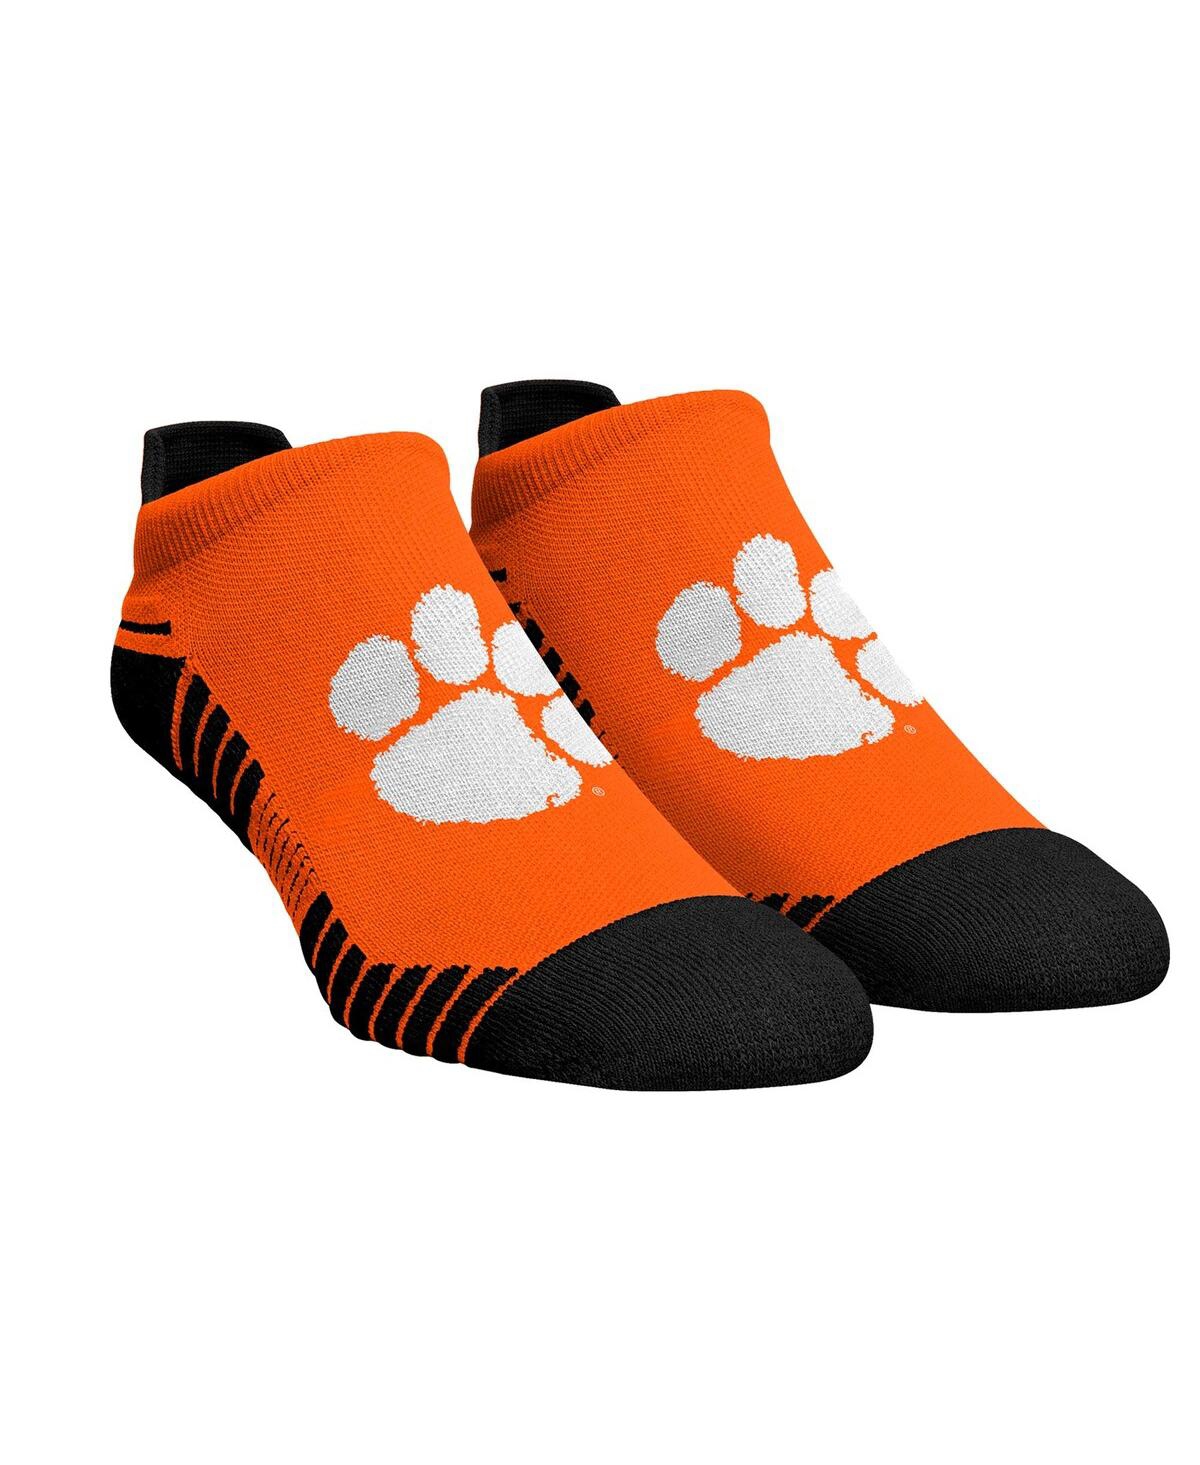 Men's and Women's Rock 'Em Socks Clemson Tigers Hex Performance Ankle Socks - Orange, Black